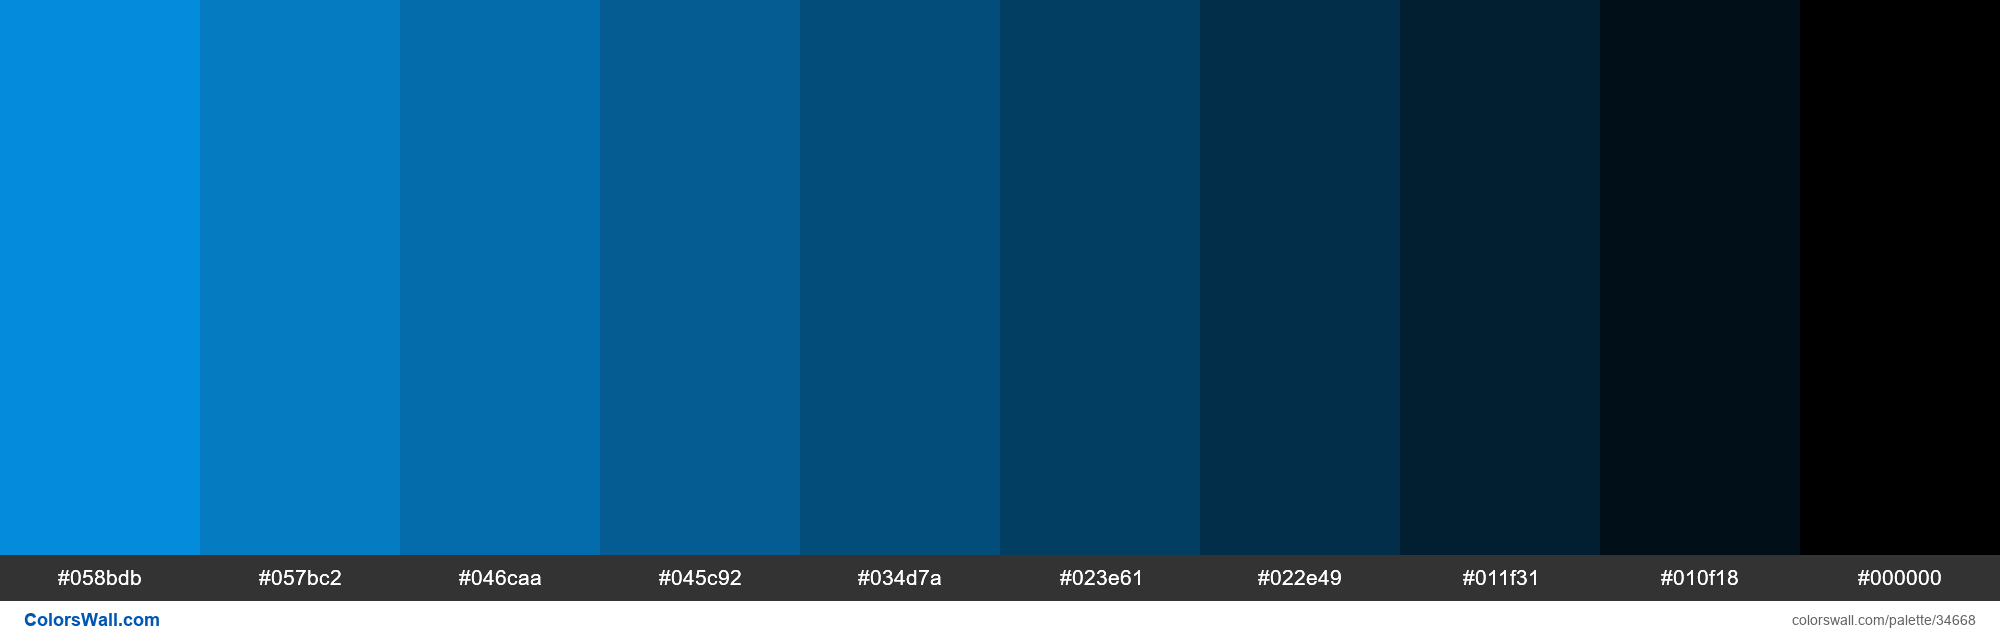 Shades XKCD Color azure #069af3 hex colors palette - ColorsWall